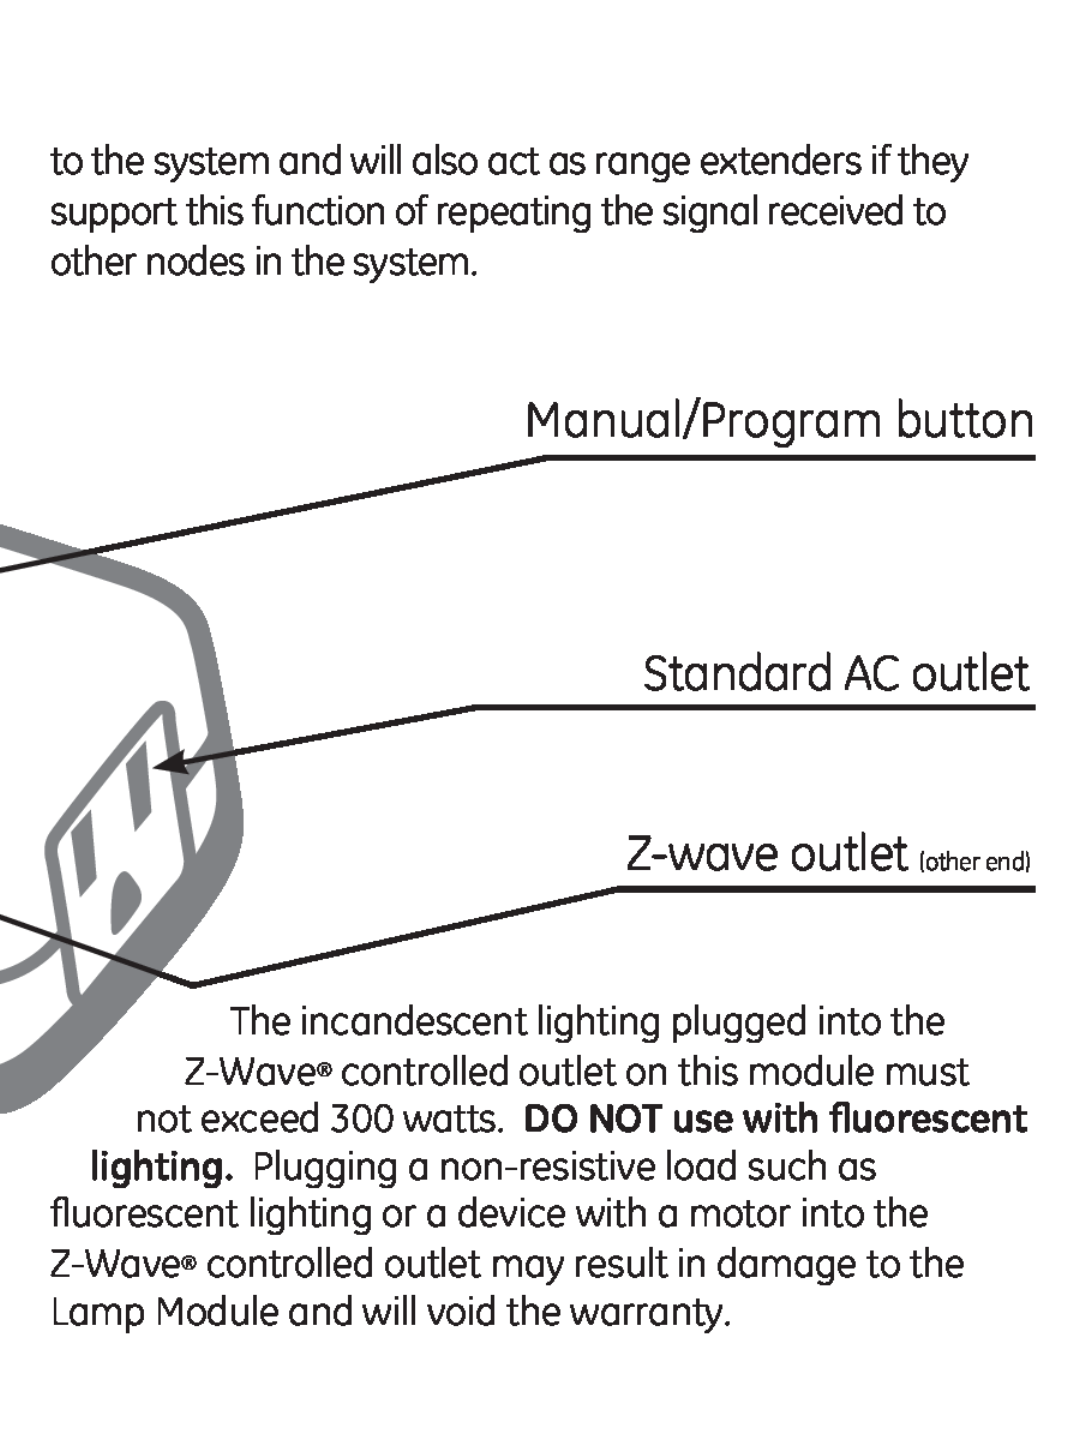 GE 45602 manual Manual/Program button Standard AC outlet, Z-waveoutlet other end 